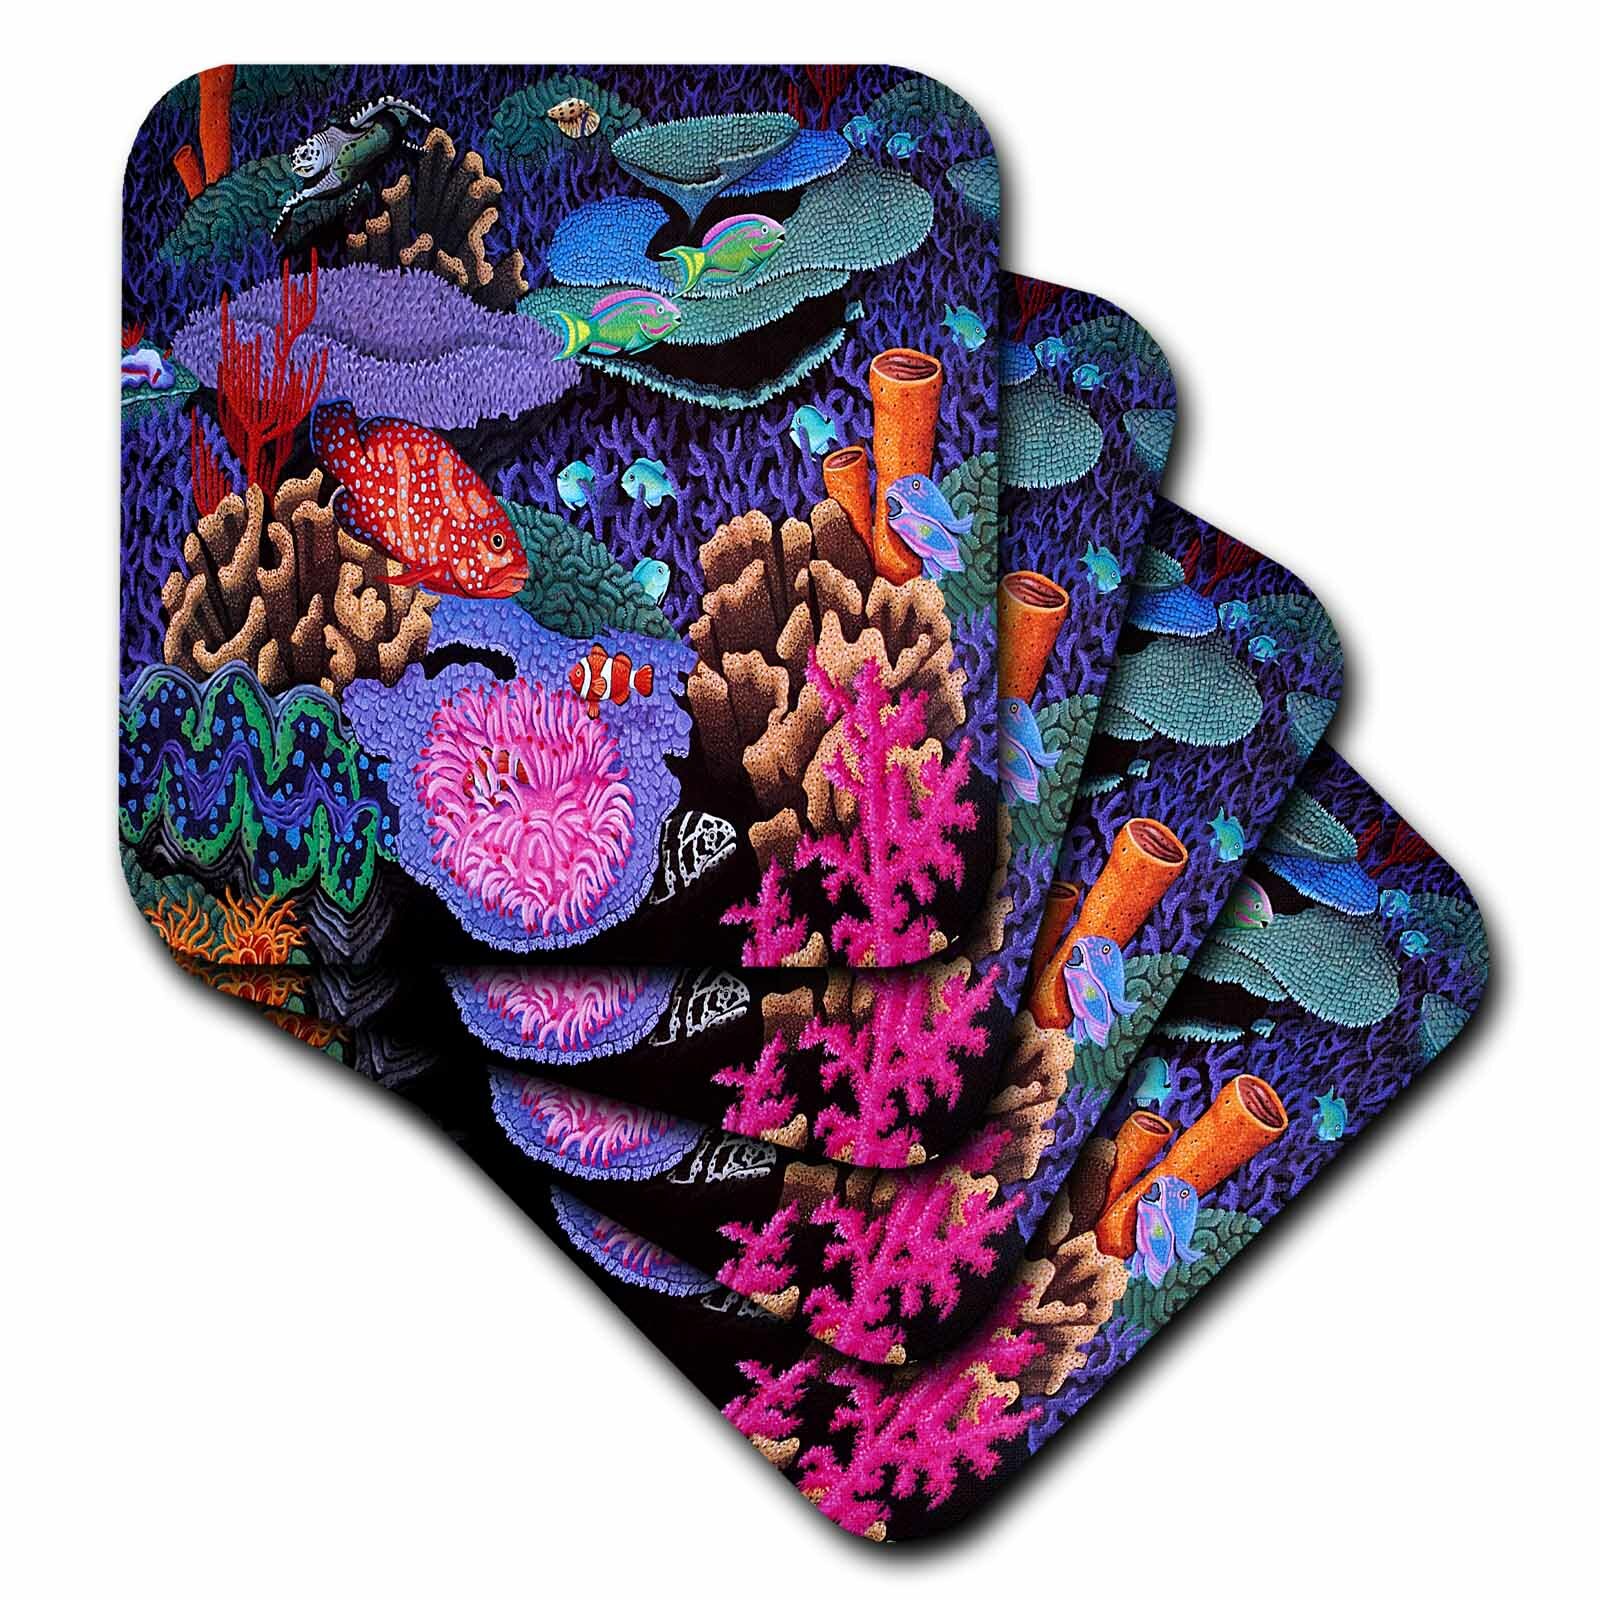 3dRose CST_3217_3 Colorful Fish Ceramic Tile Coasters Set of 4 